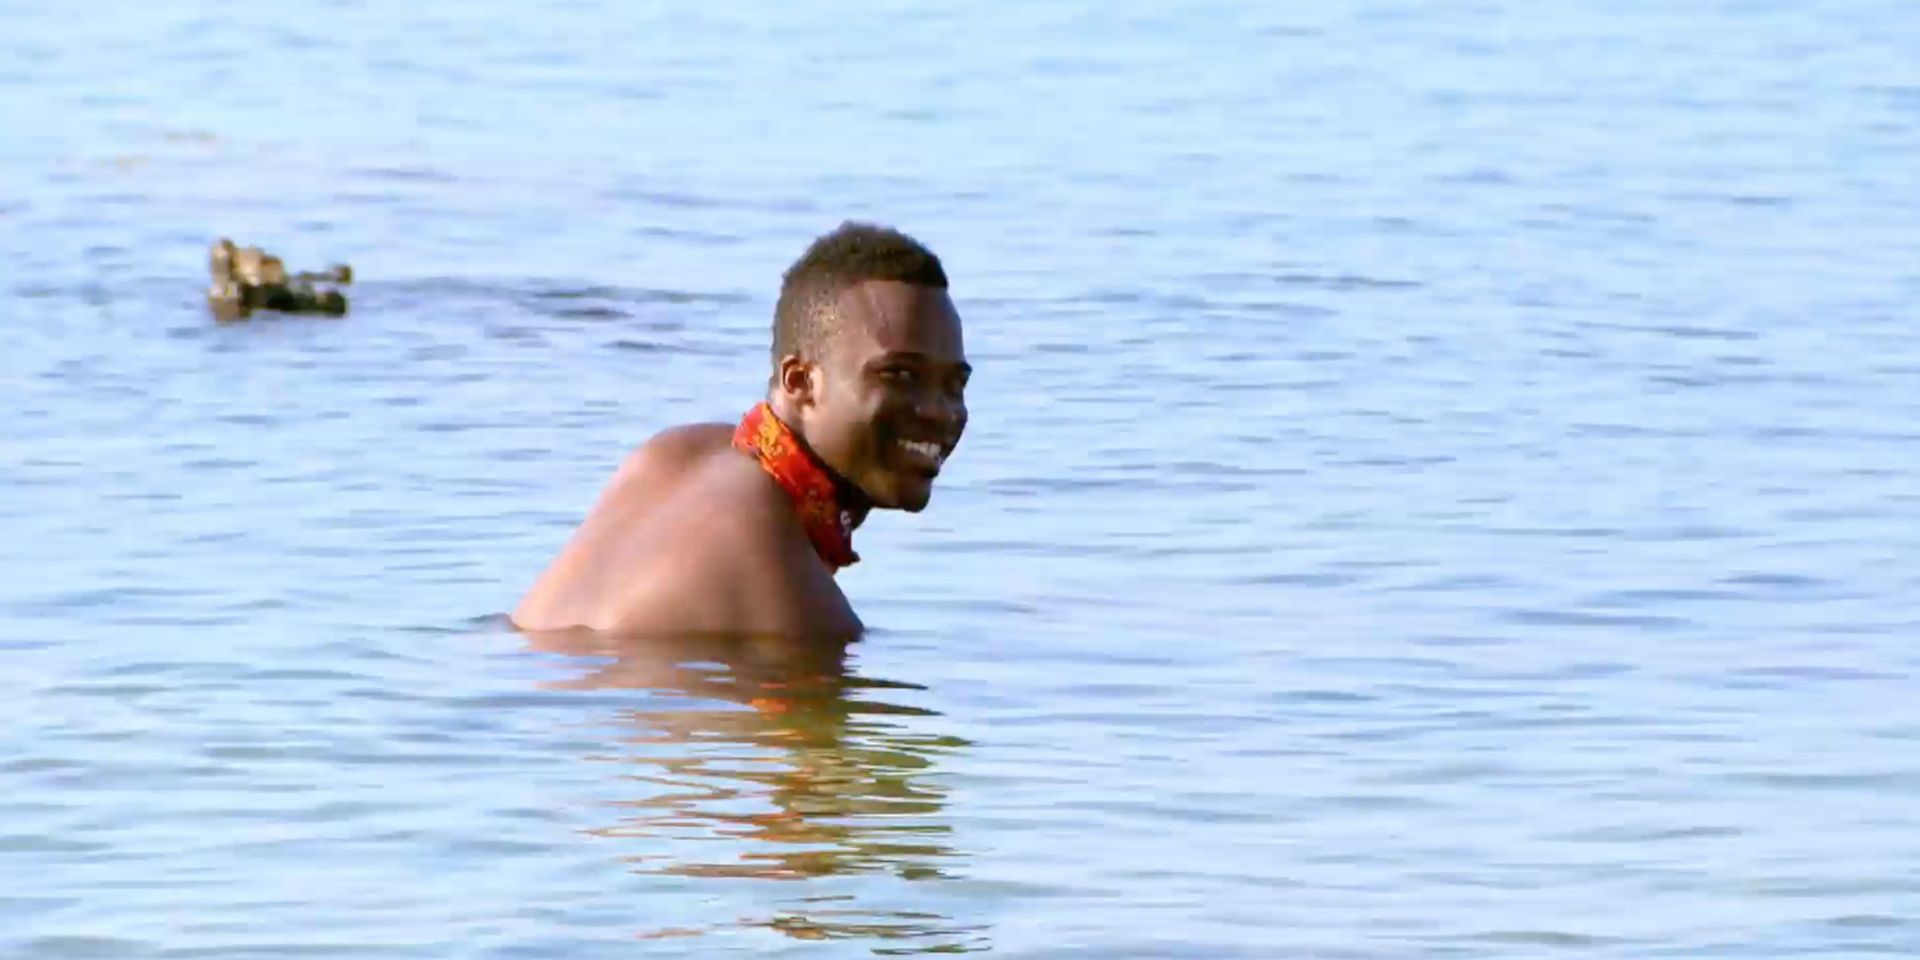 Darnell in the water in Survivor